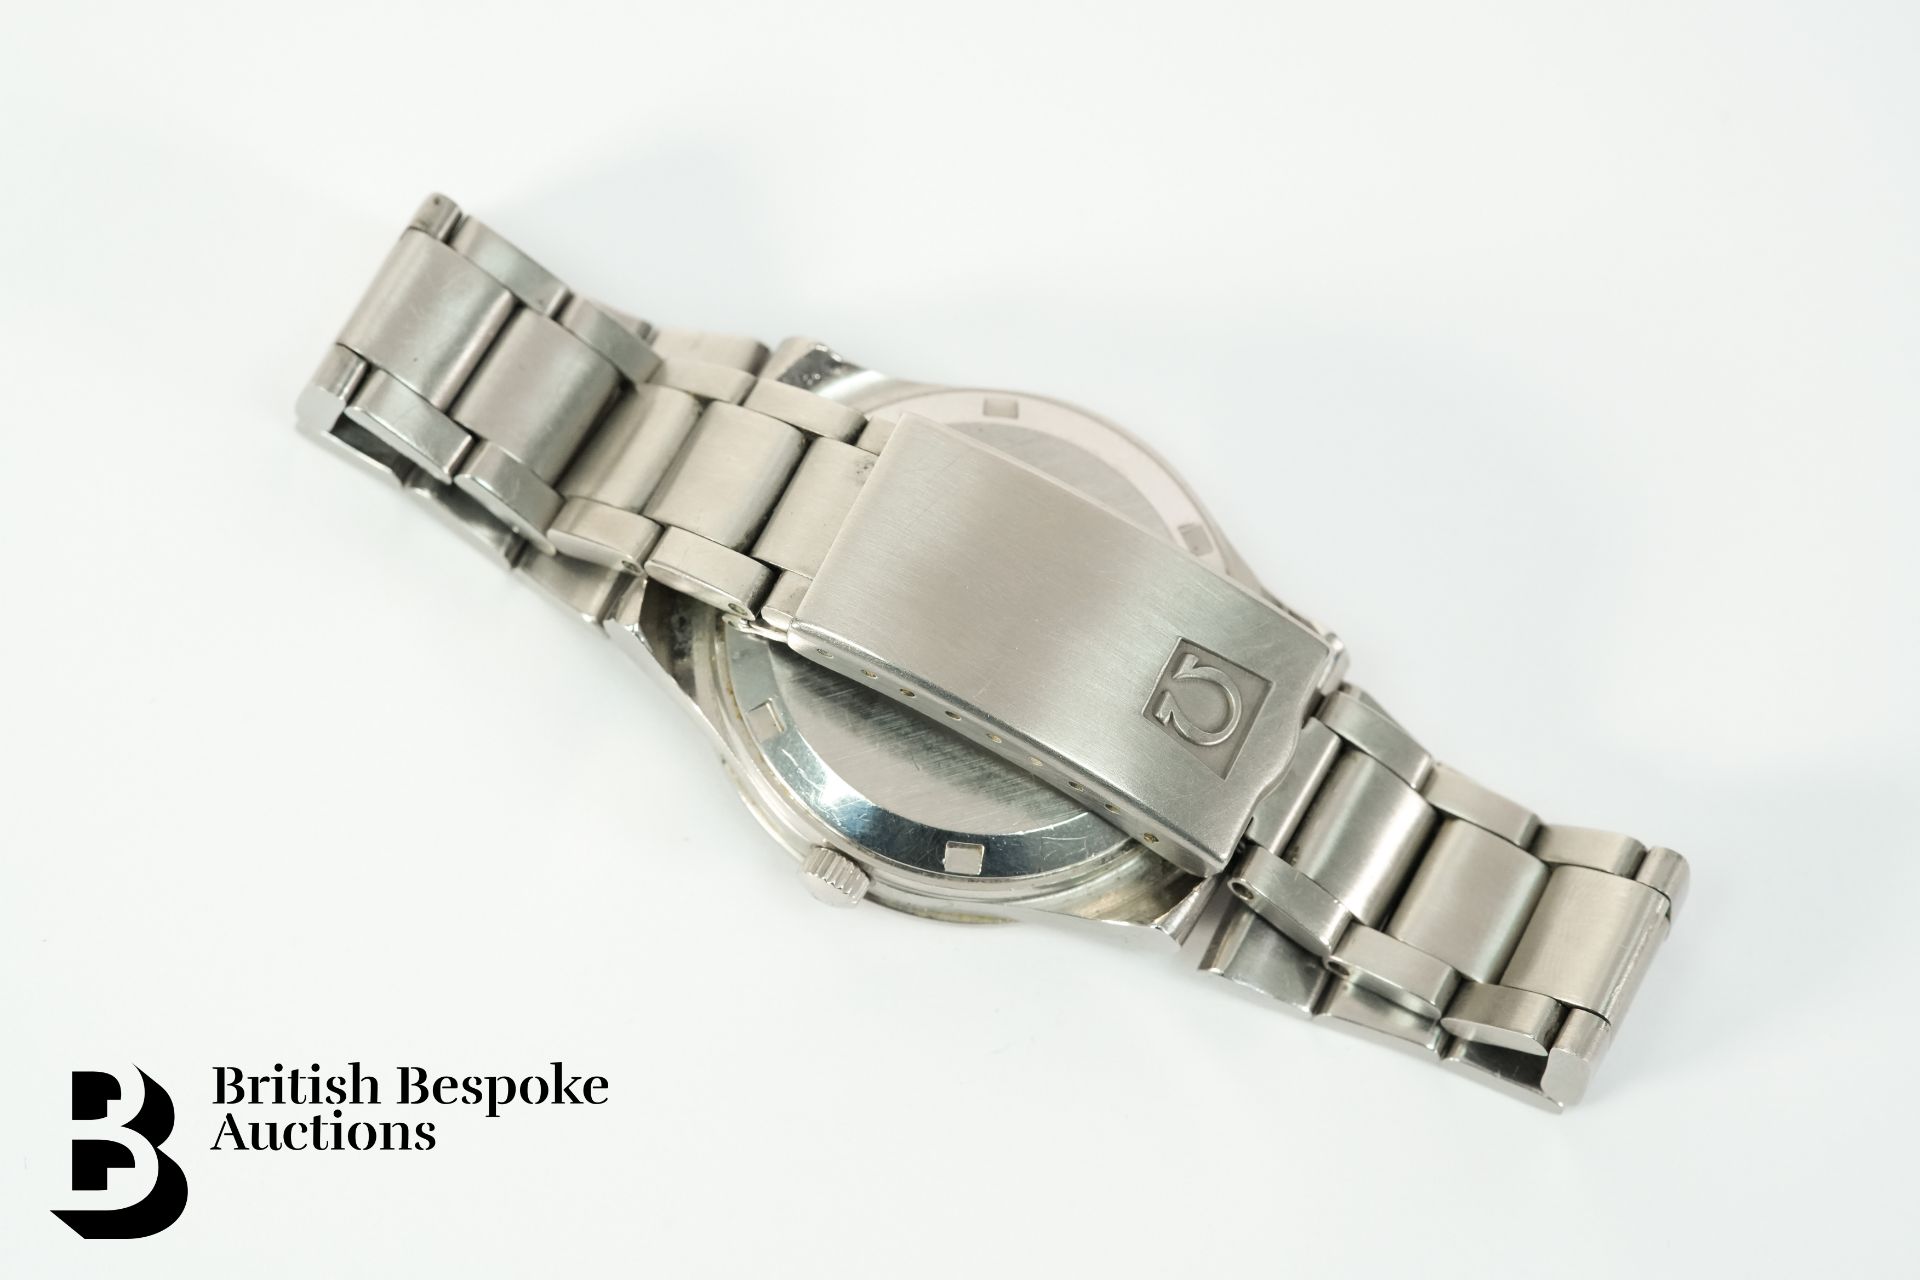 Gentleman's Omega Automatic Geneve Wrist Watch - Image 3 of 3